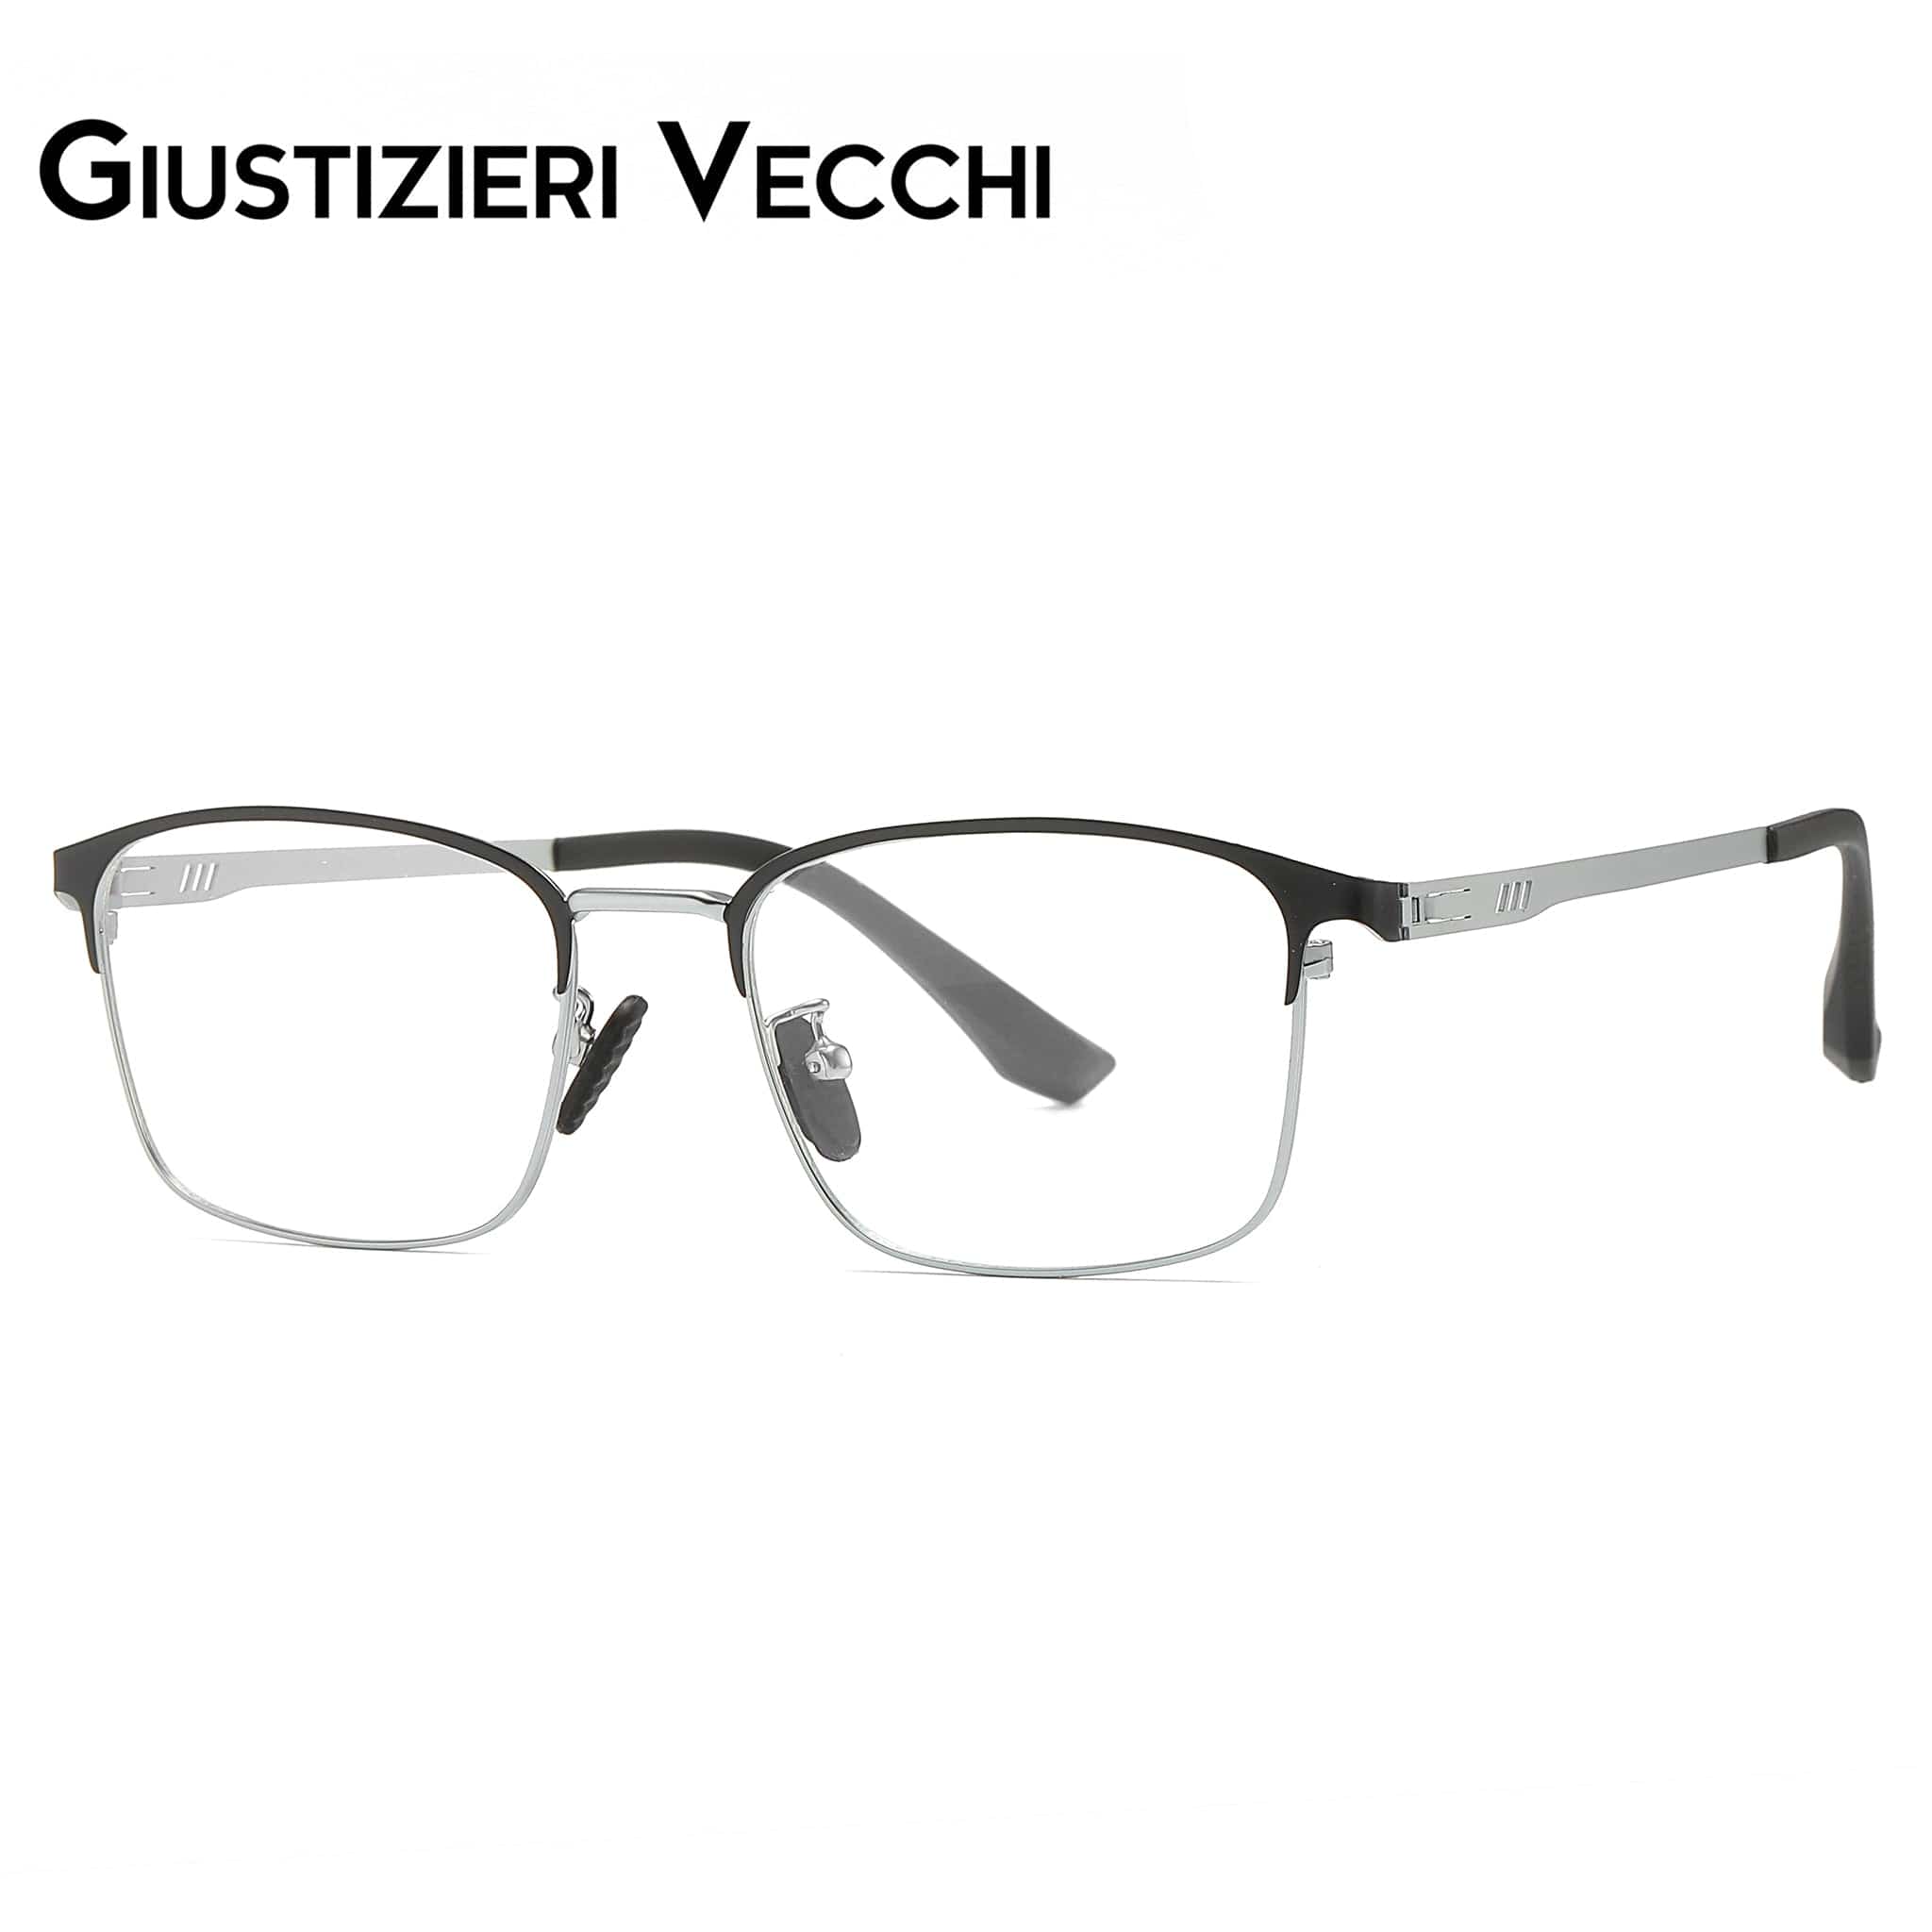 GIUSTIZIERI VECCHI Eyeglasses Firestorm Duo